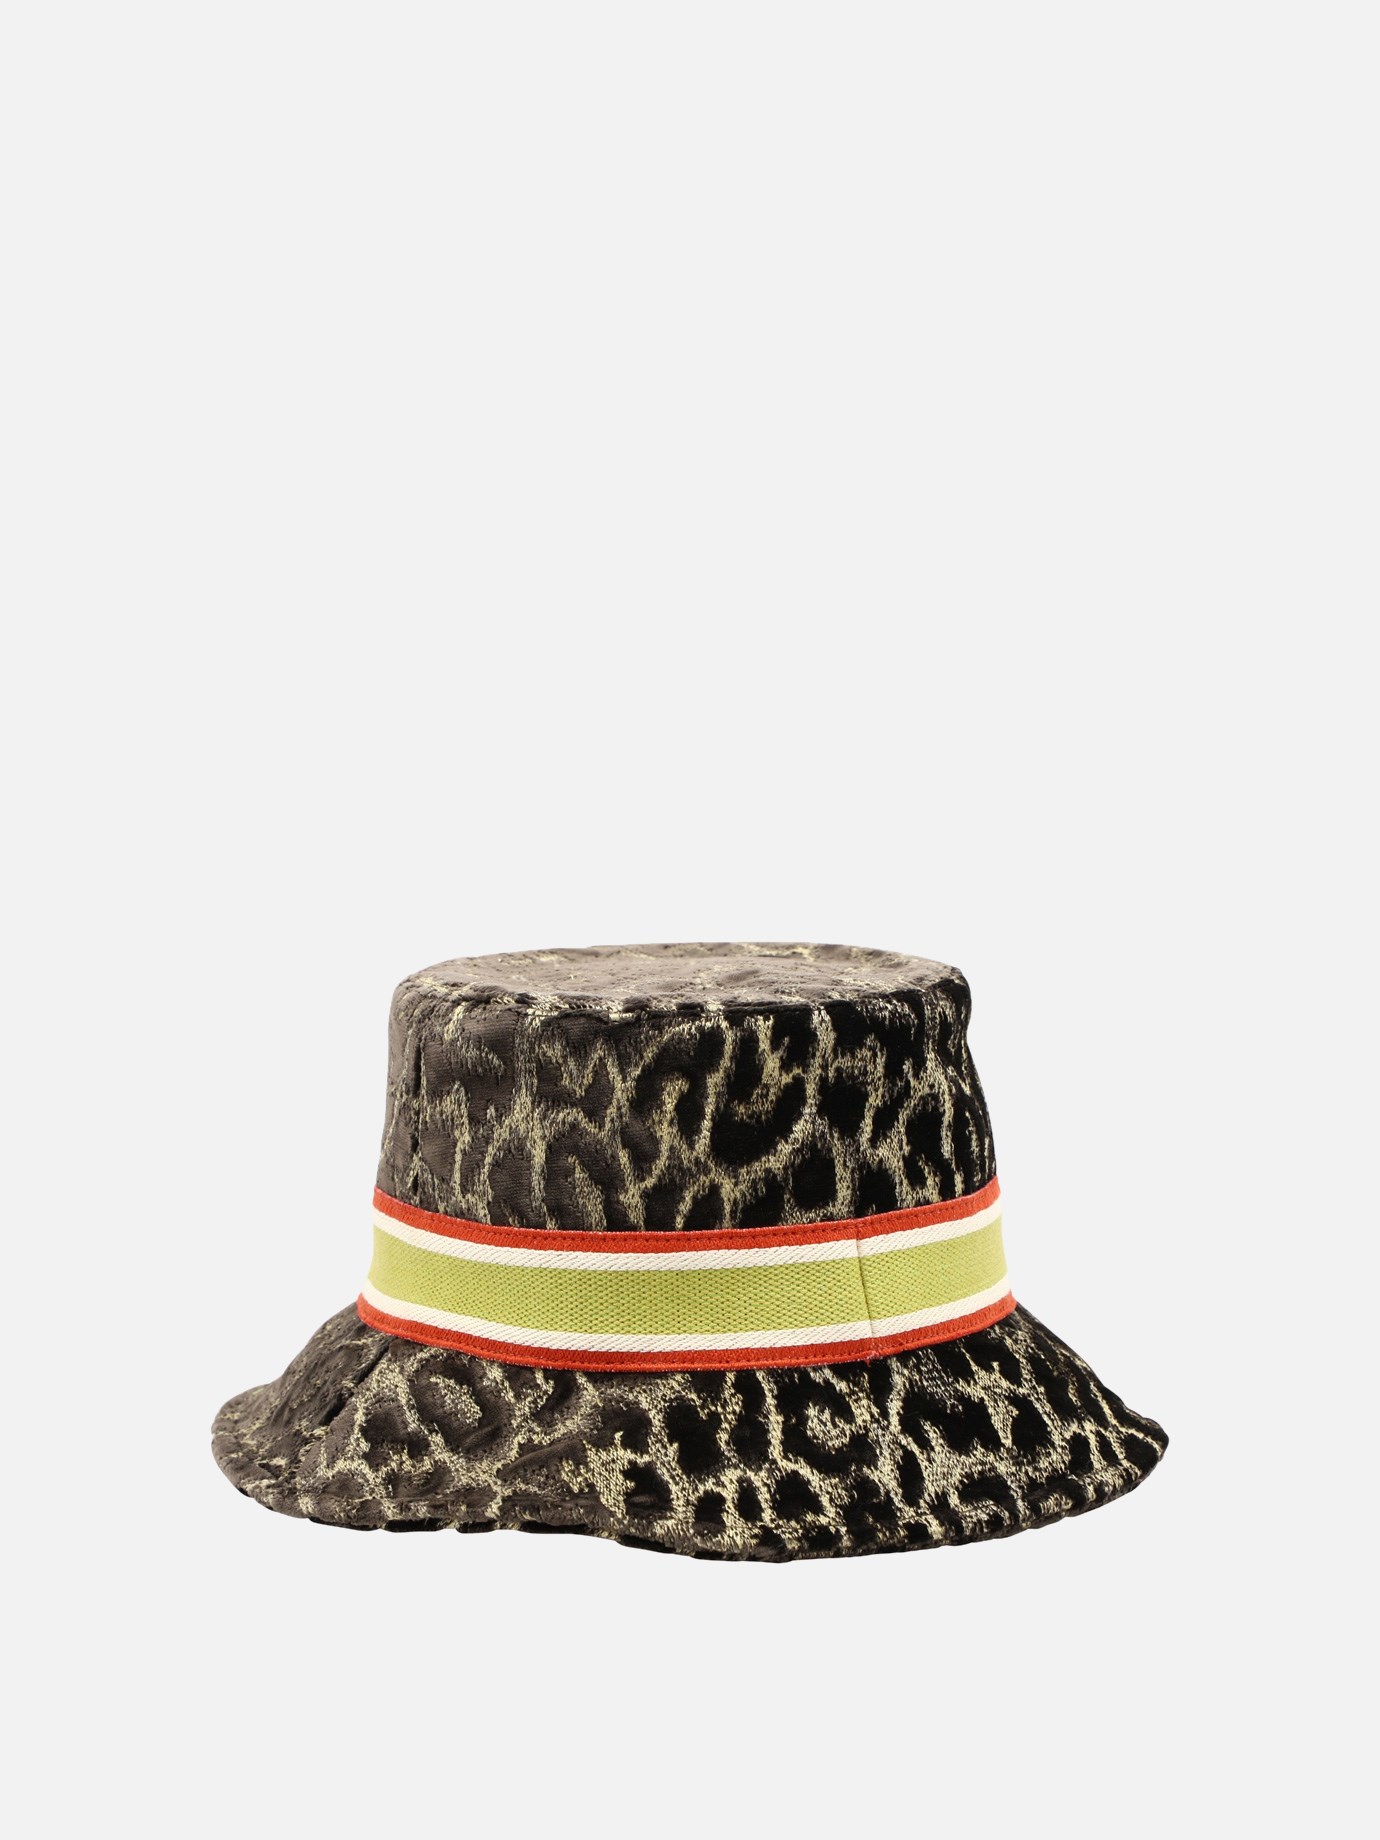  Mizza Velvet  bucket hat by Dior